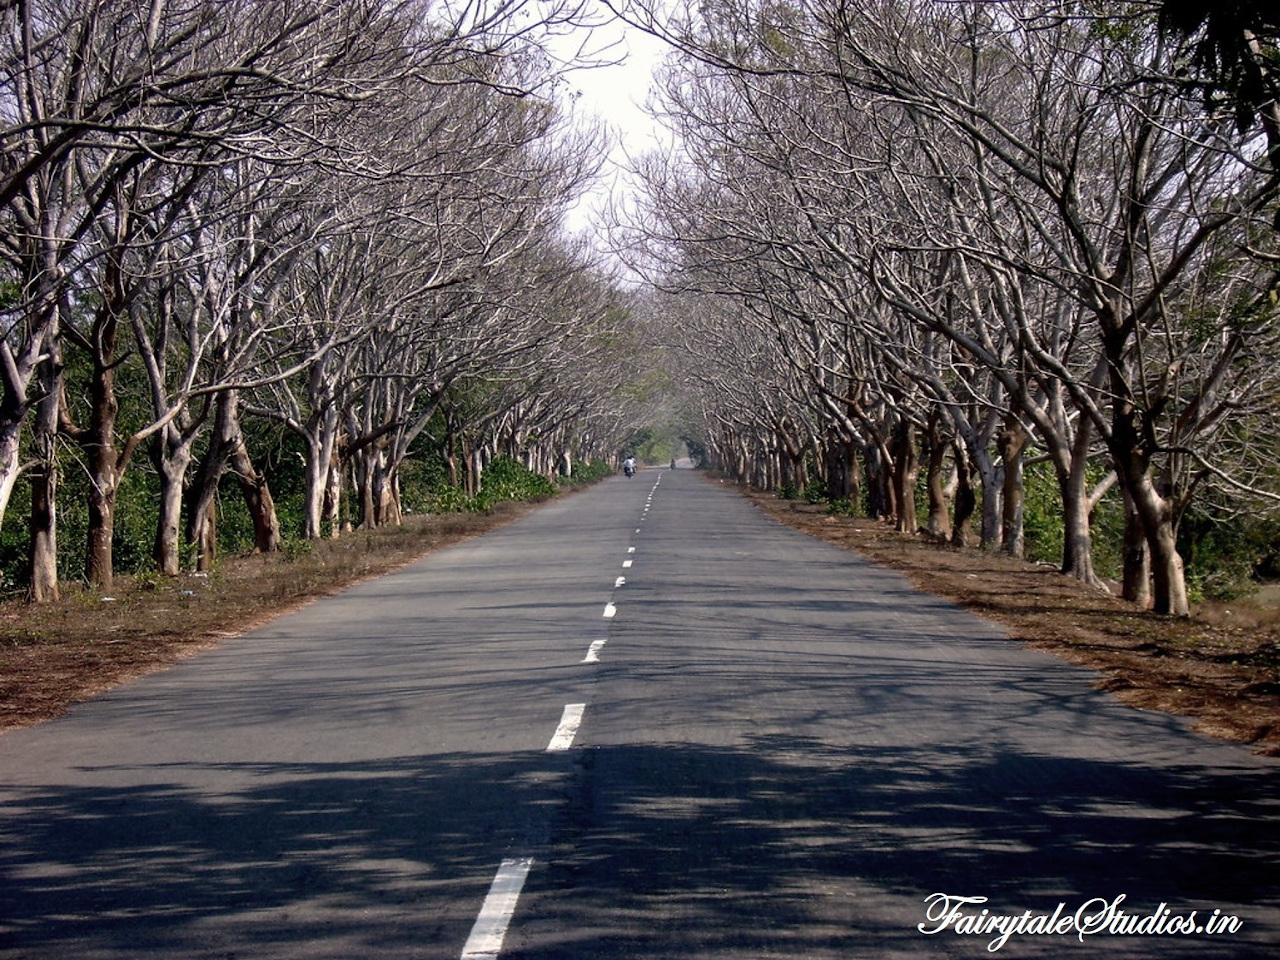 Konark to Puri in Odisha is one of the best road trips in India